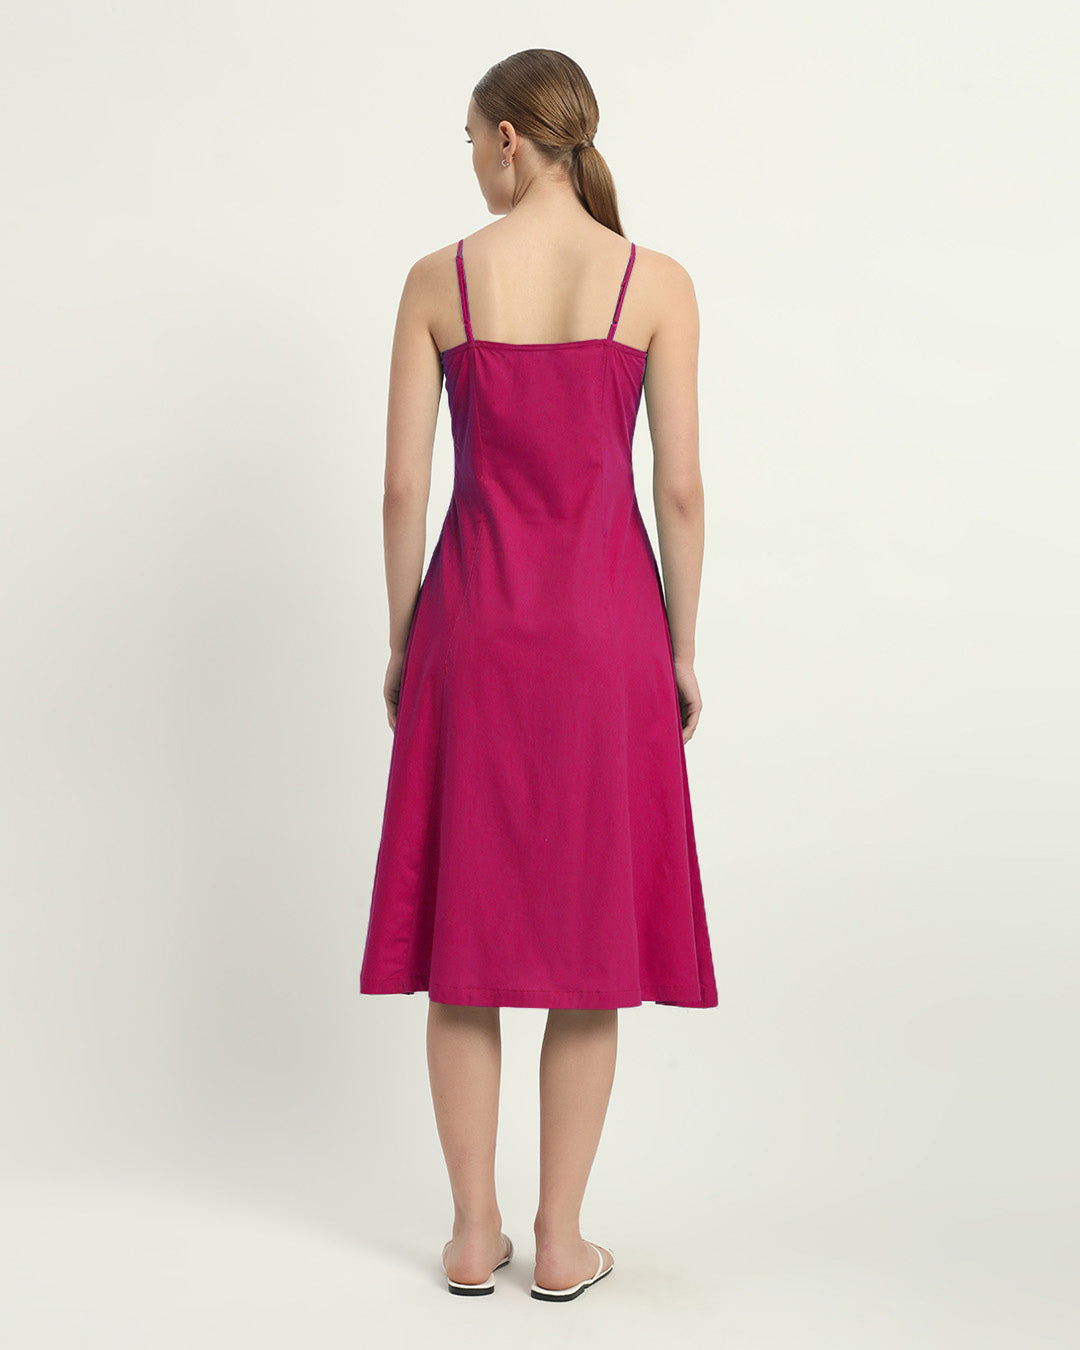 The Berry Valatie Cotton Dress